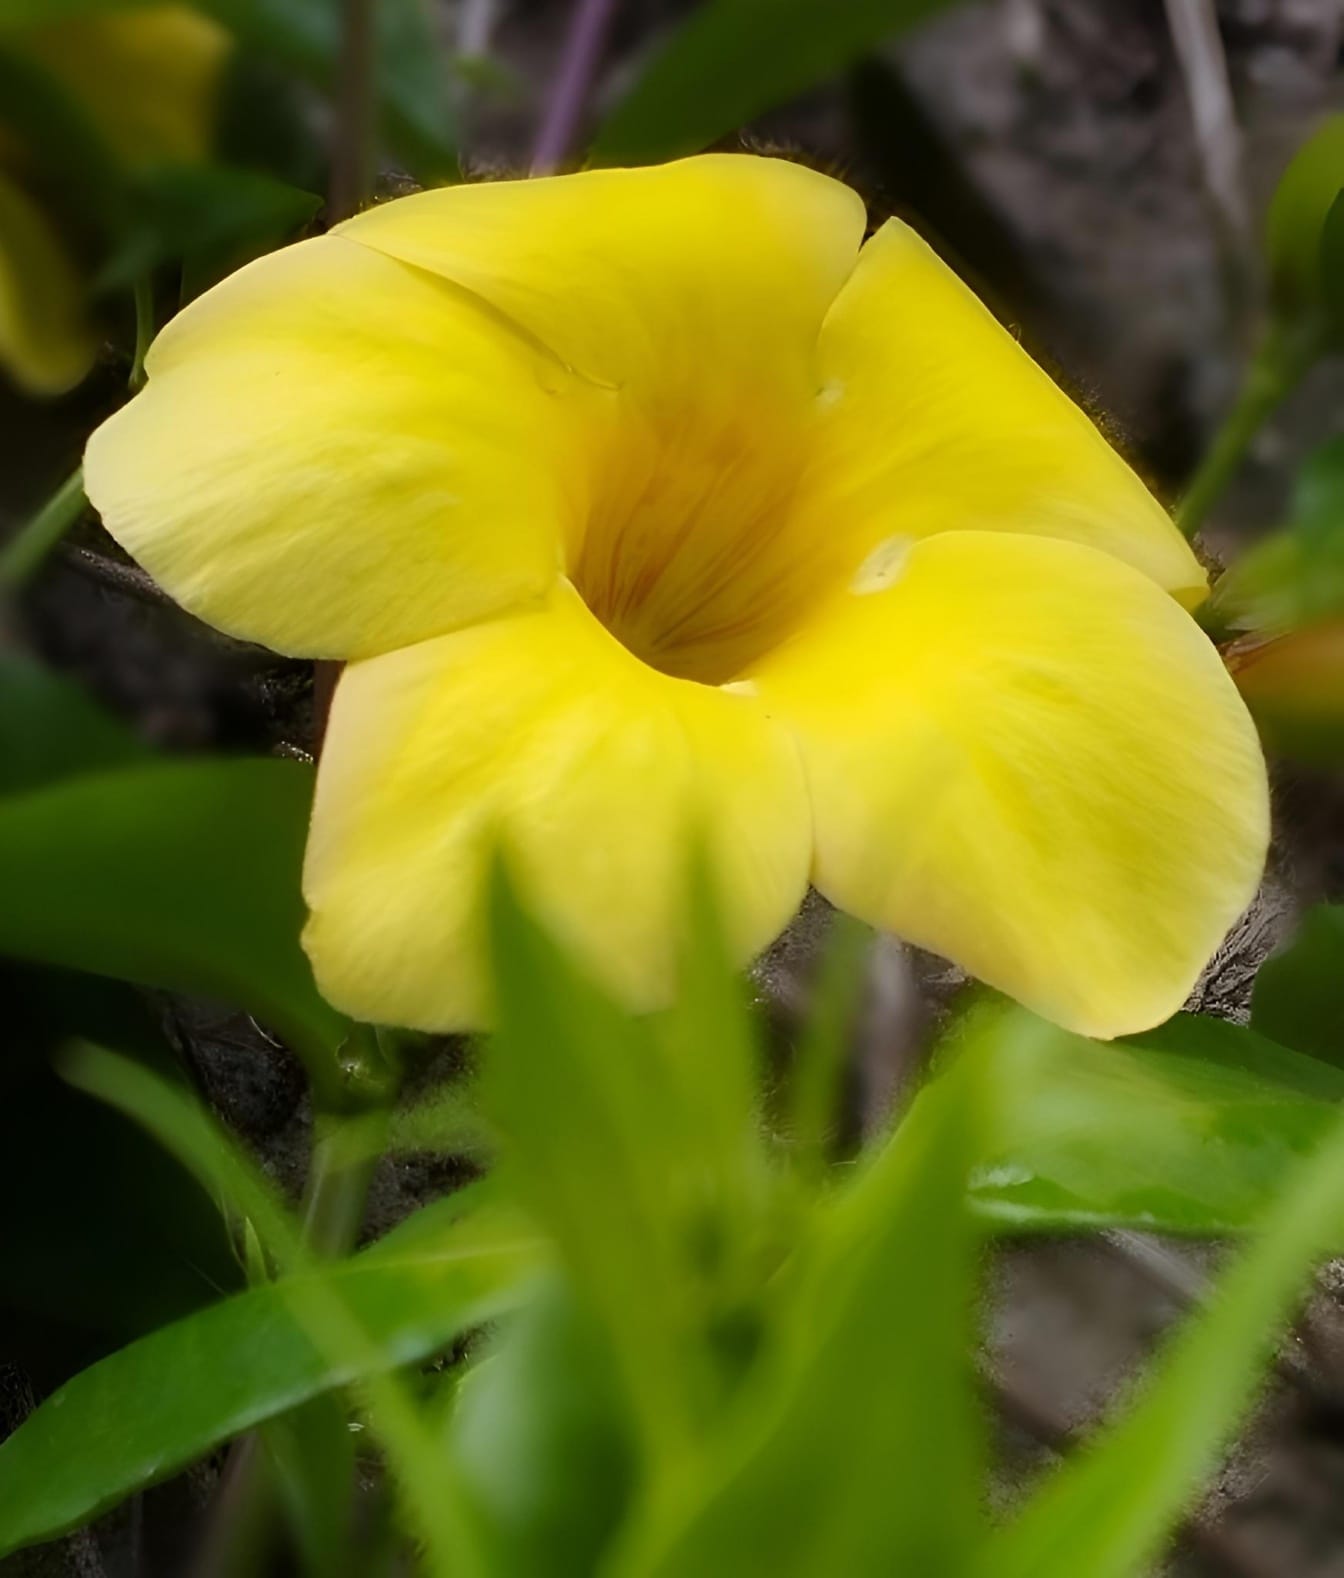 Sárga virág, zöld levelekkel, Allamanda (Allamanda schottii) néven ismert bokor